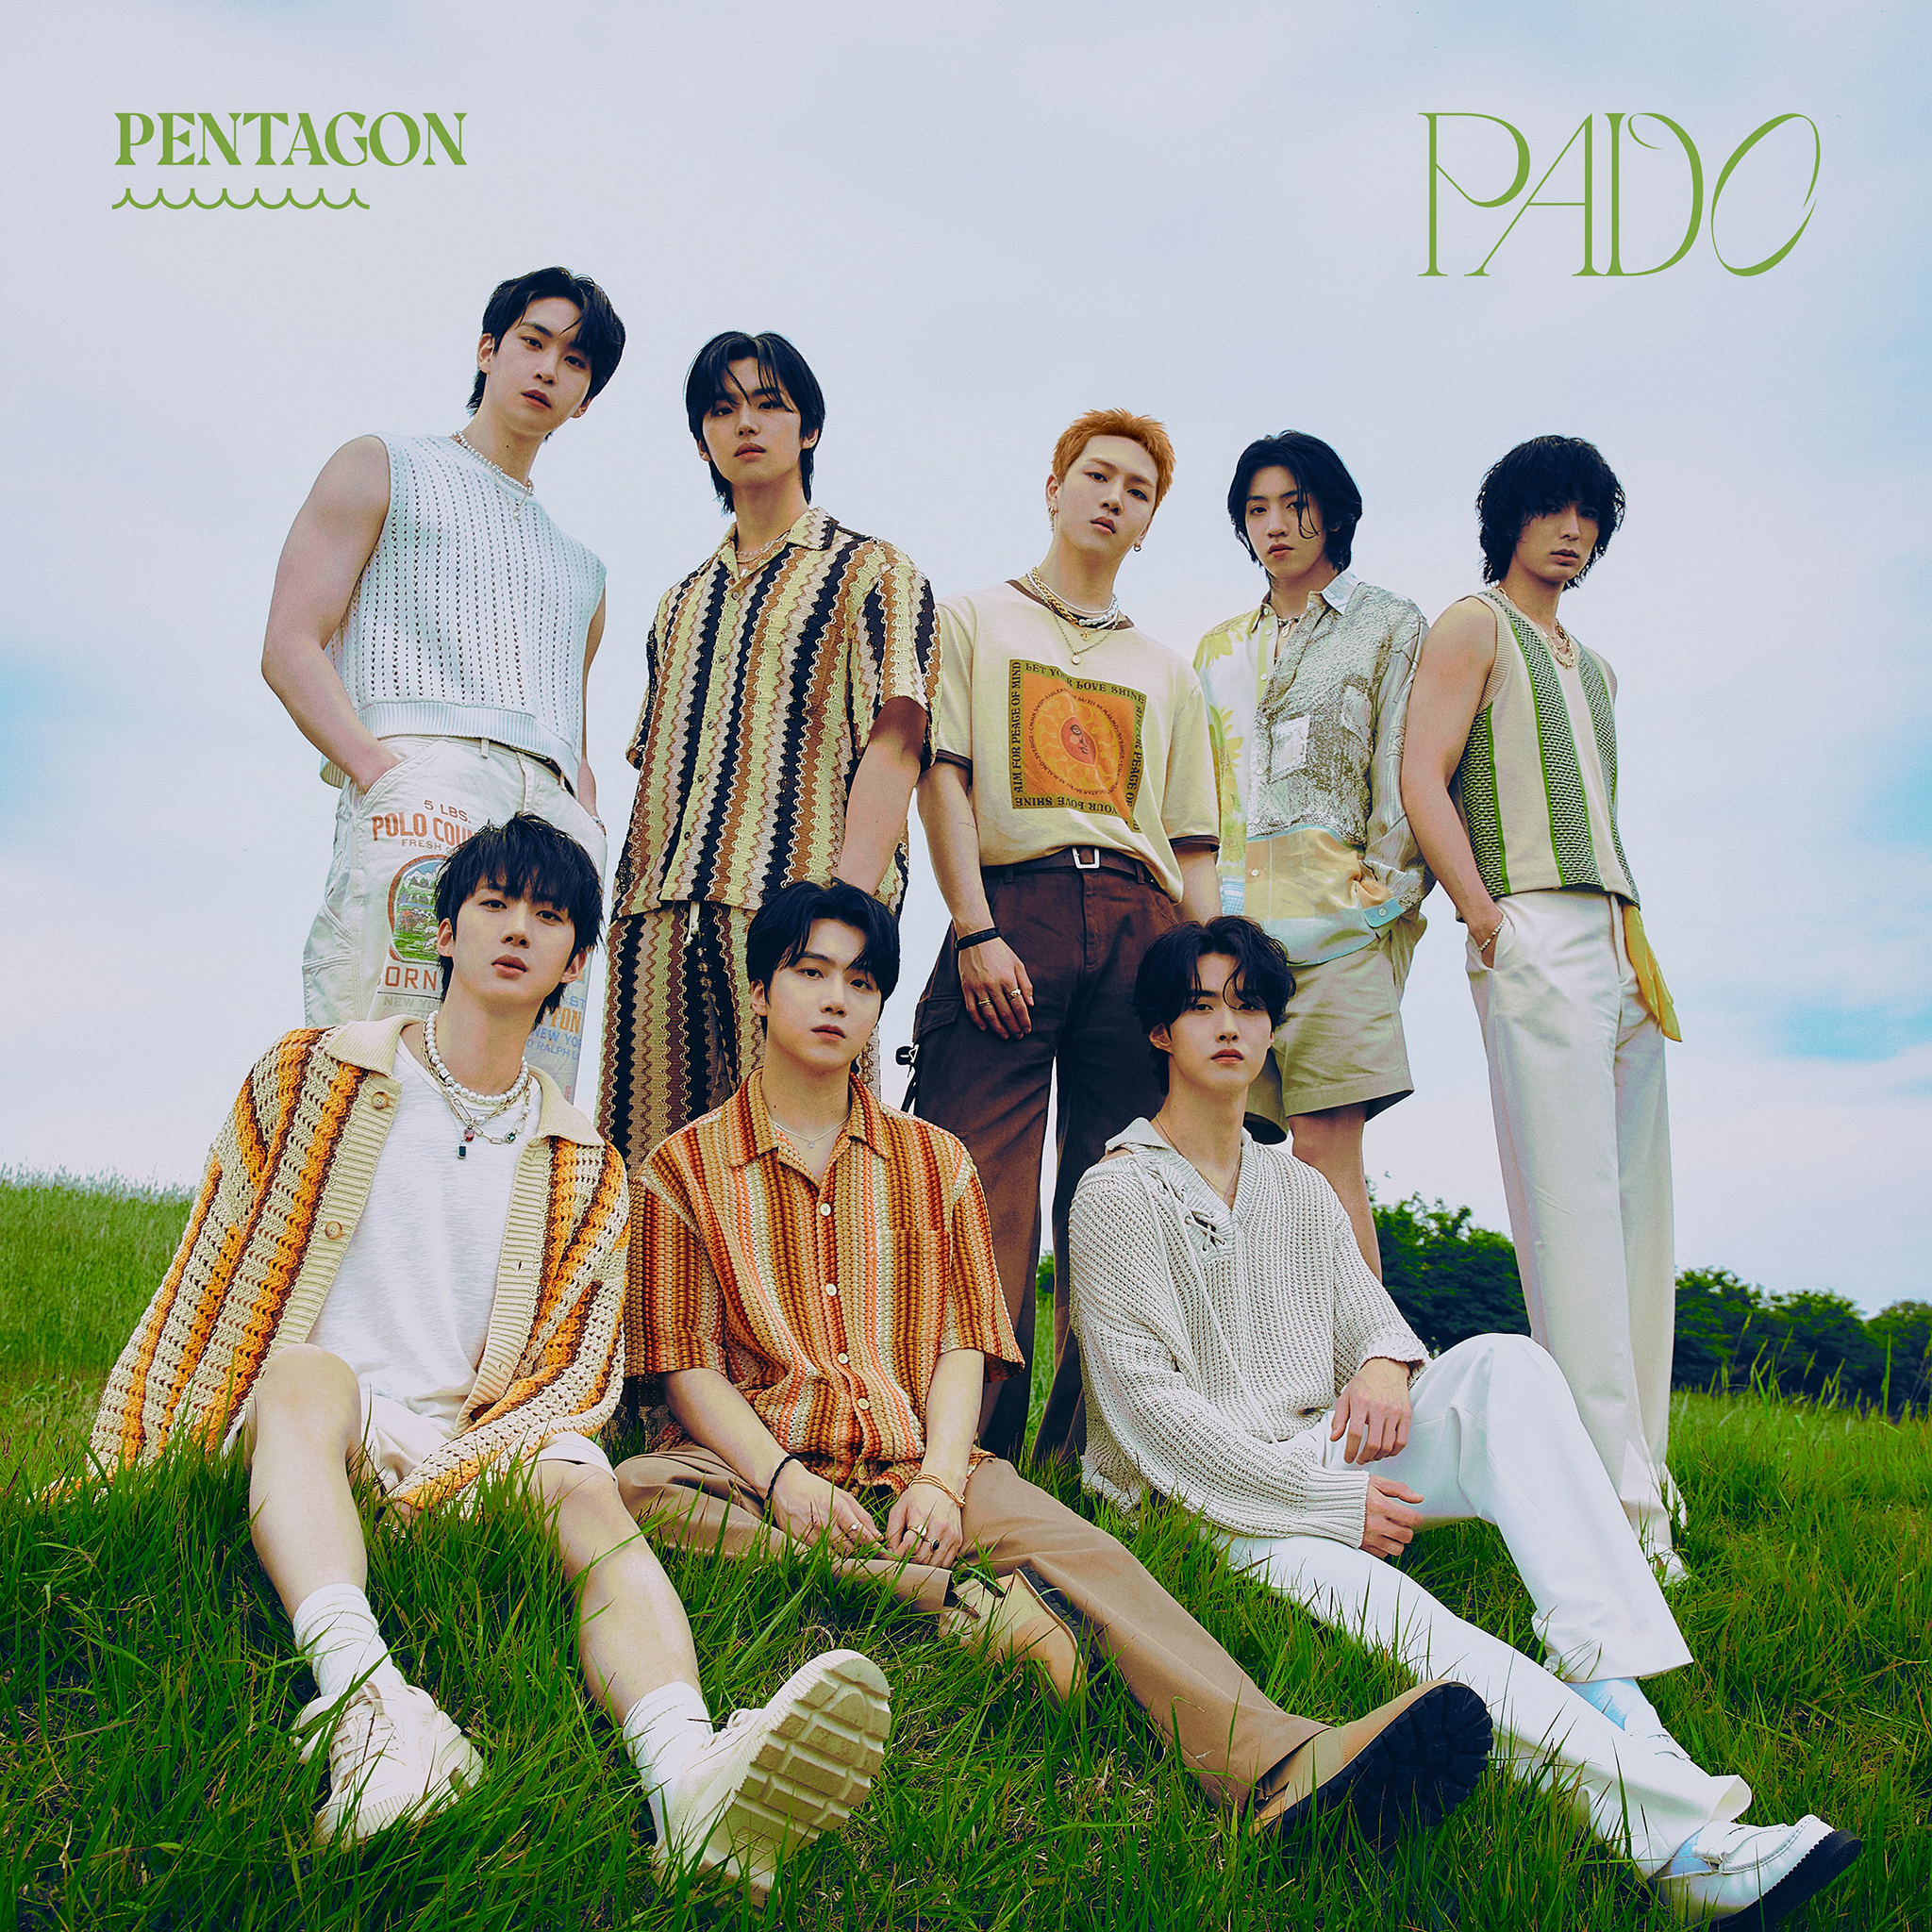 Pado (PENTAGON) | Kpop Wiki | Fandom